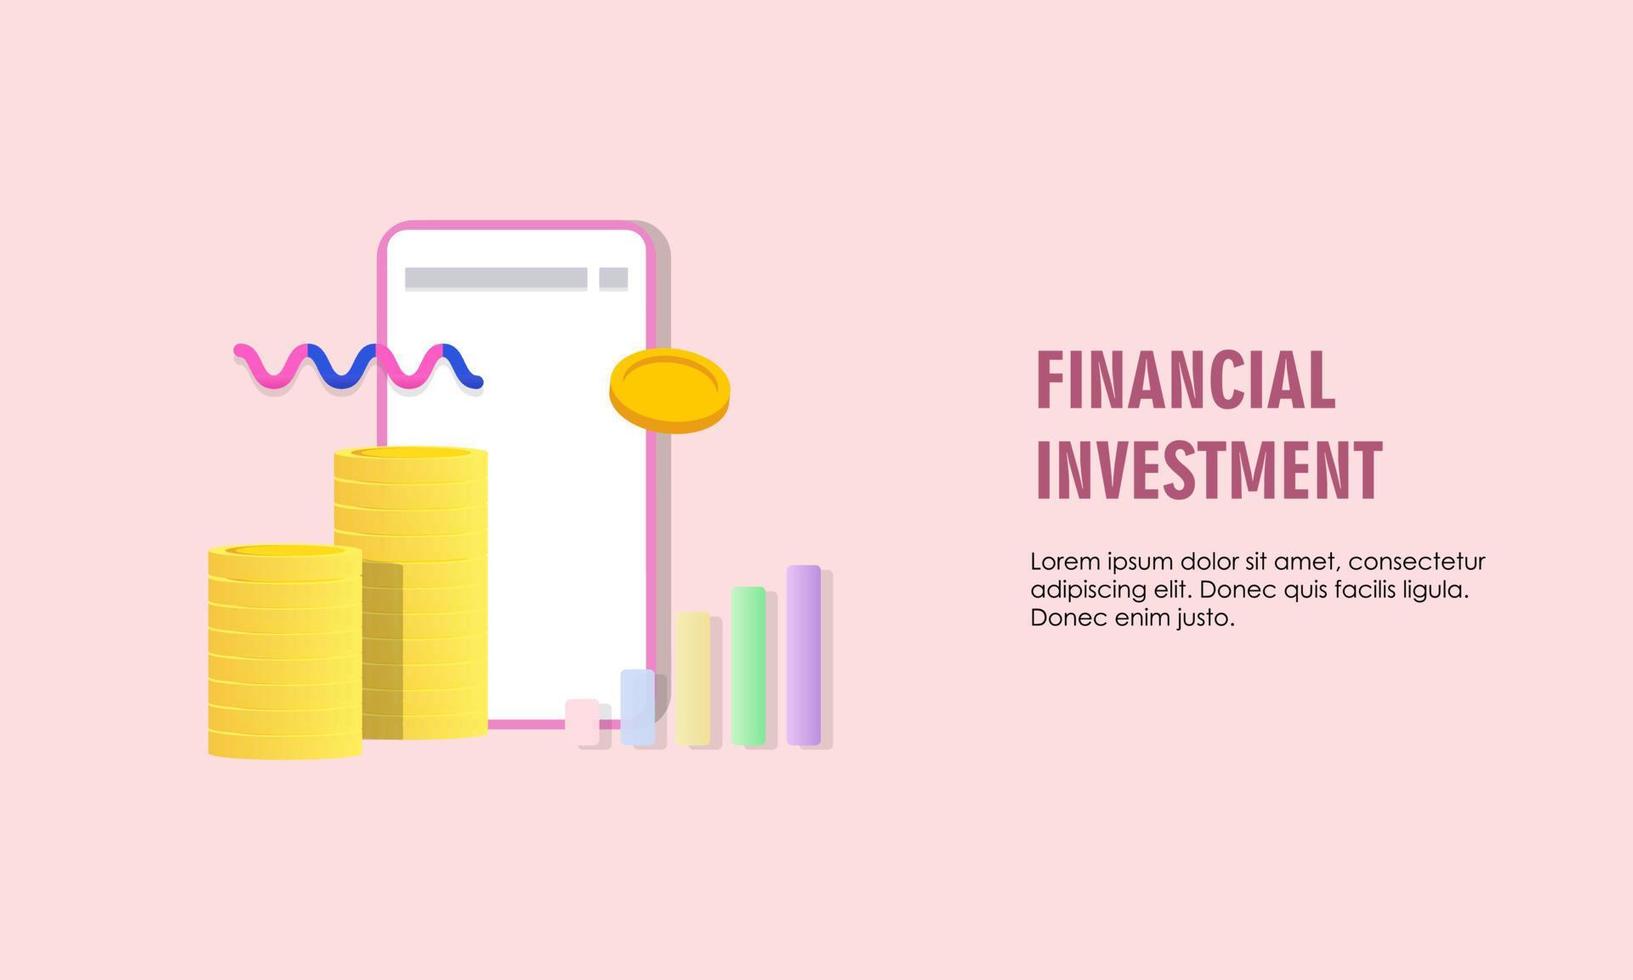 Financial investment. Creative concept of market movement logo vector